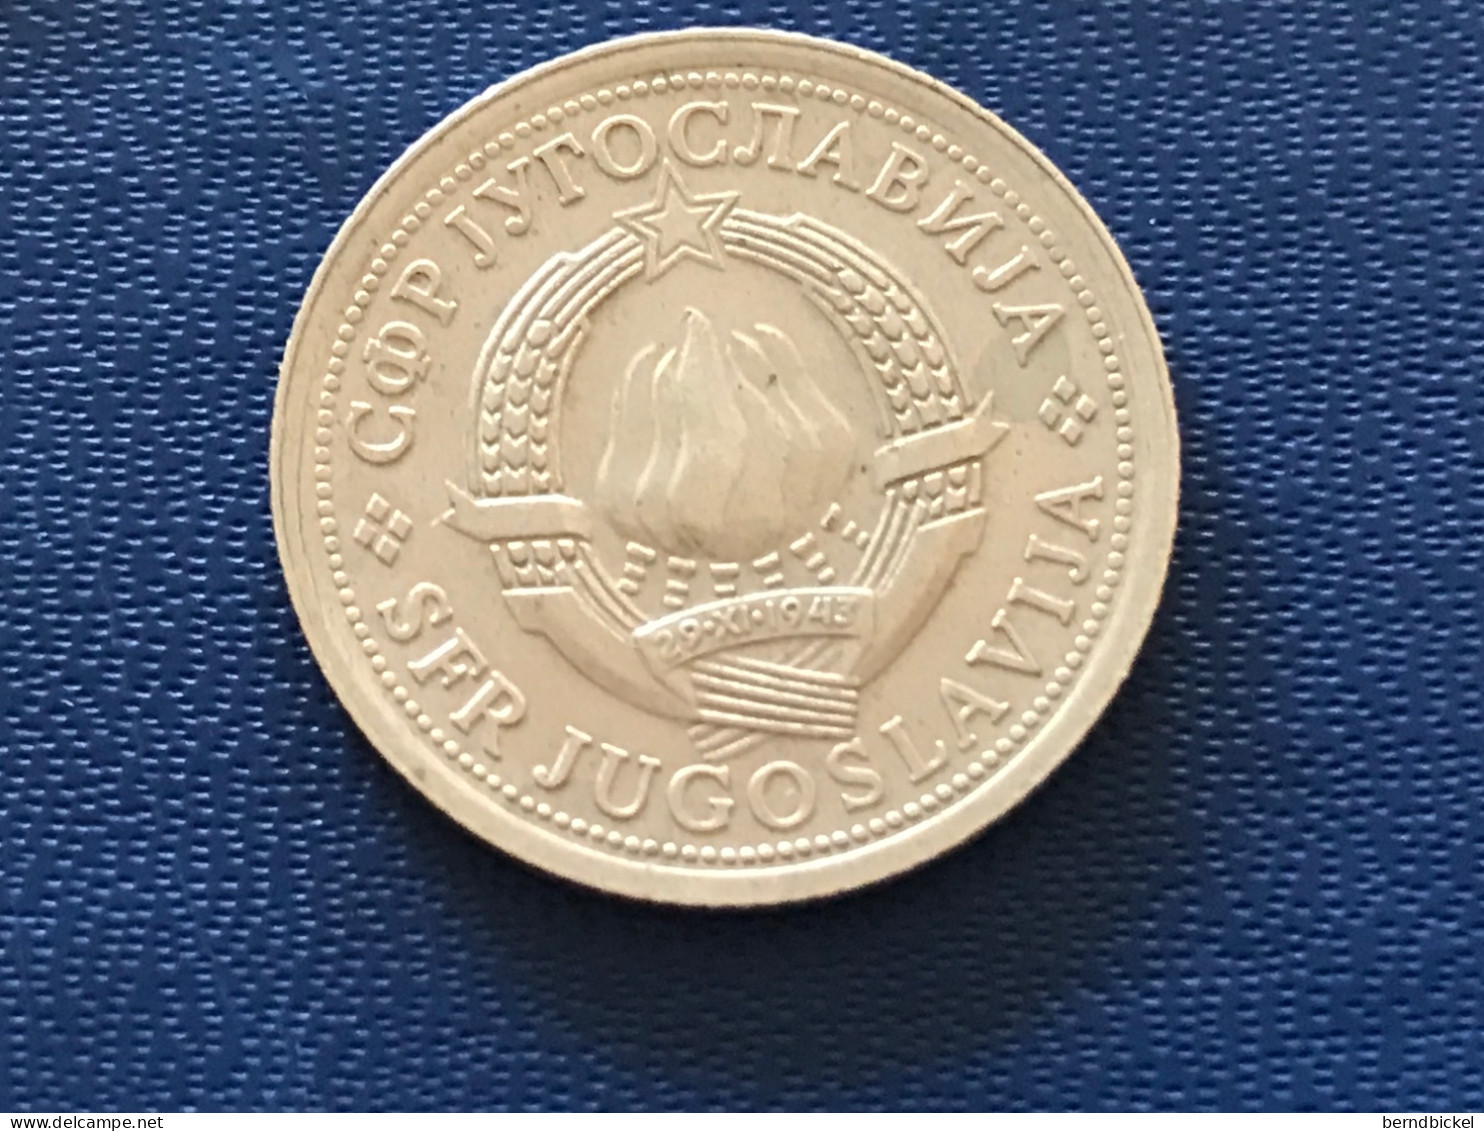 Münze Münzen Umlaufmünze Jugoslawien 1 Dinar 1976 - Yougoslavie